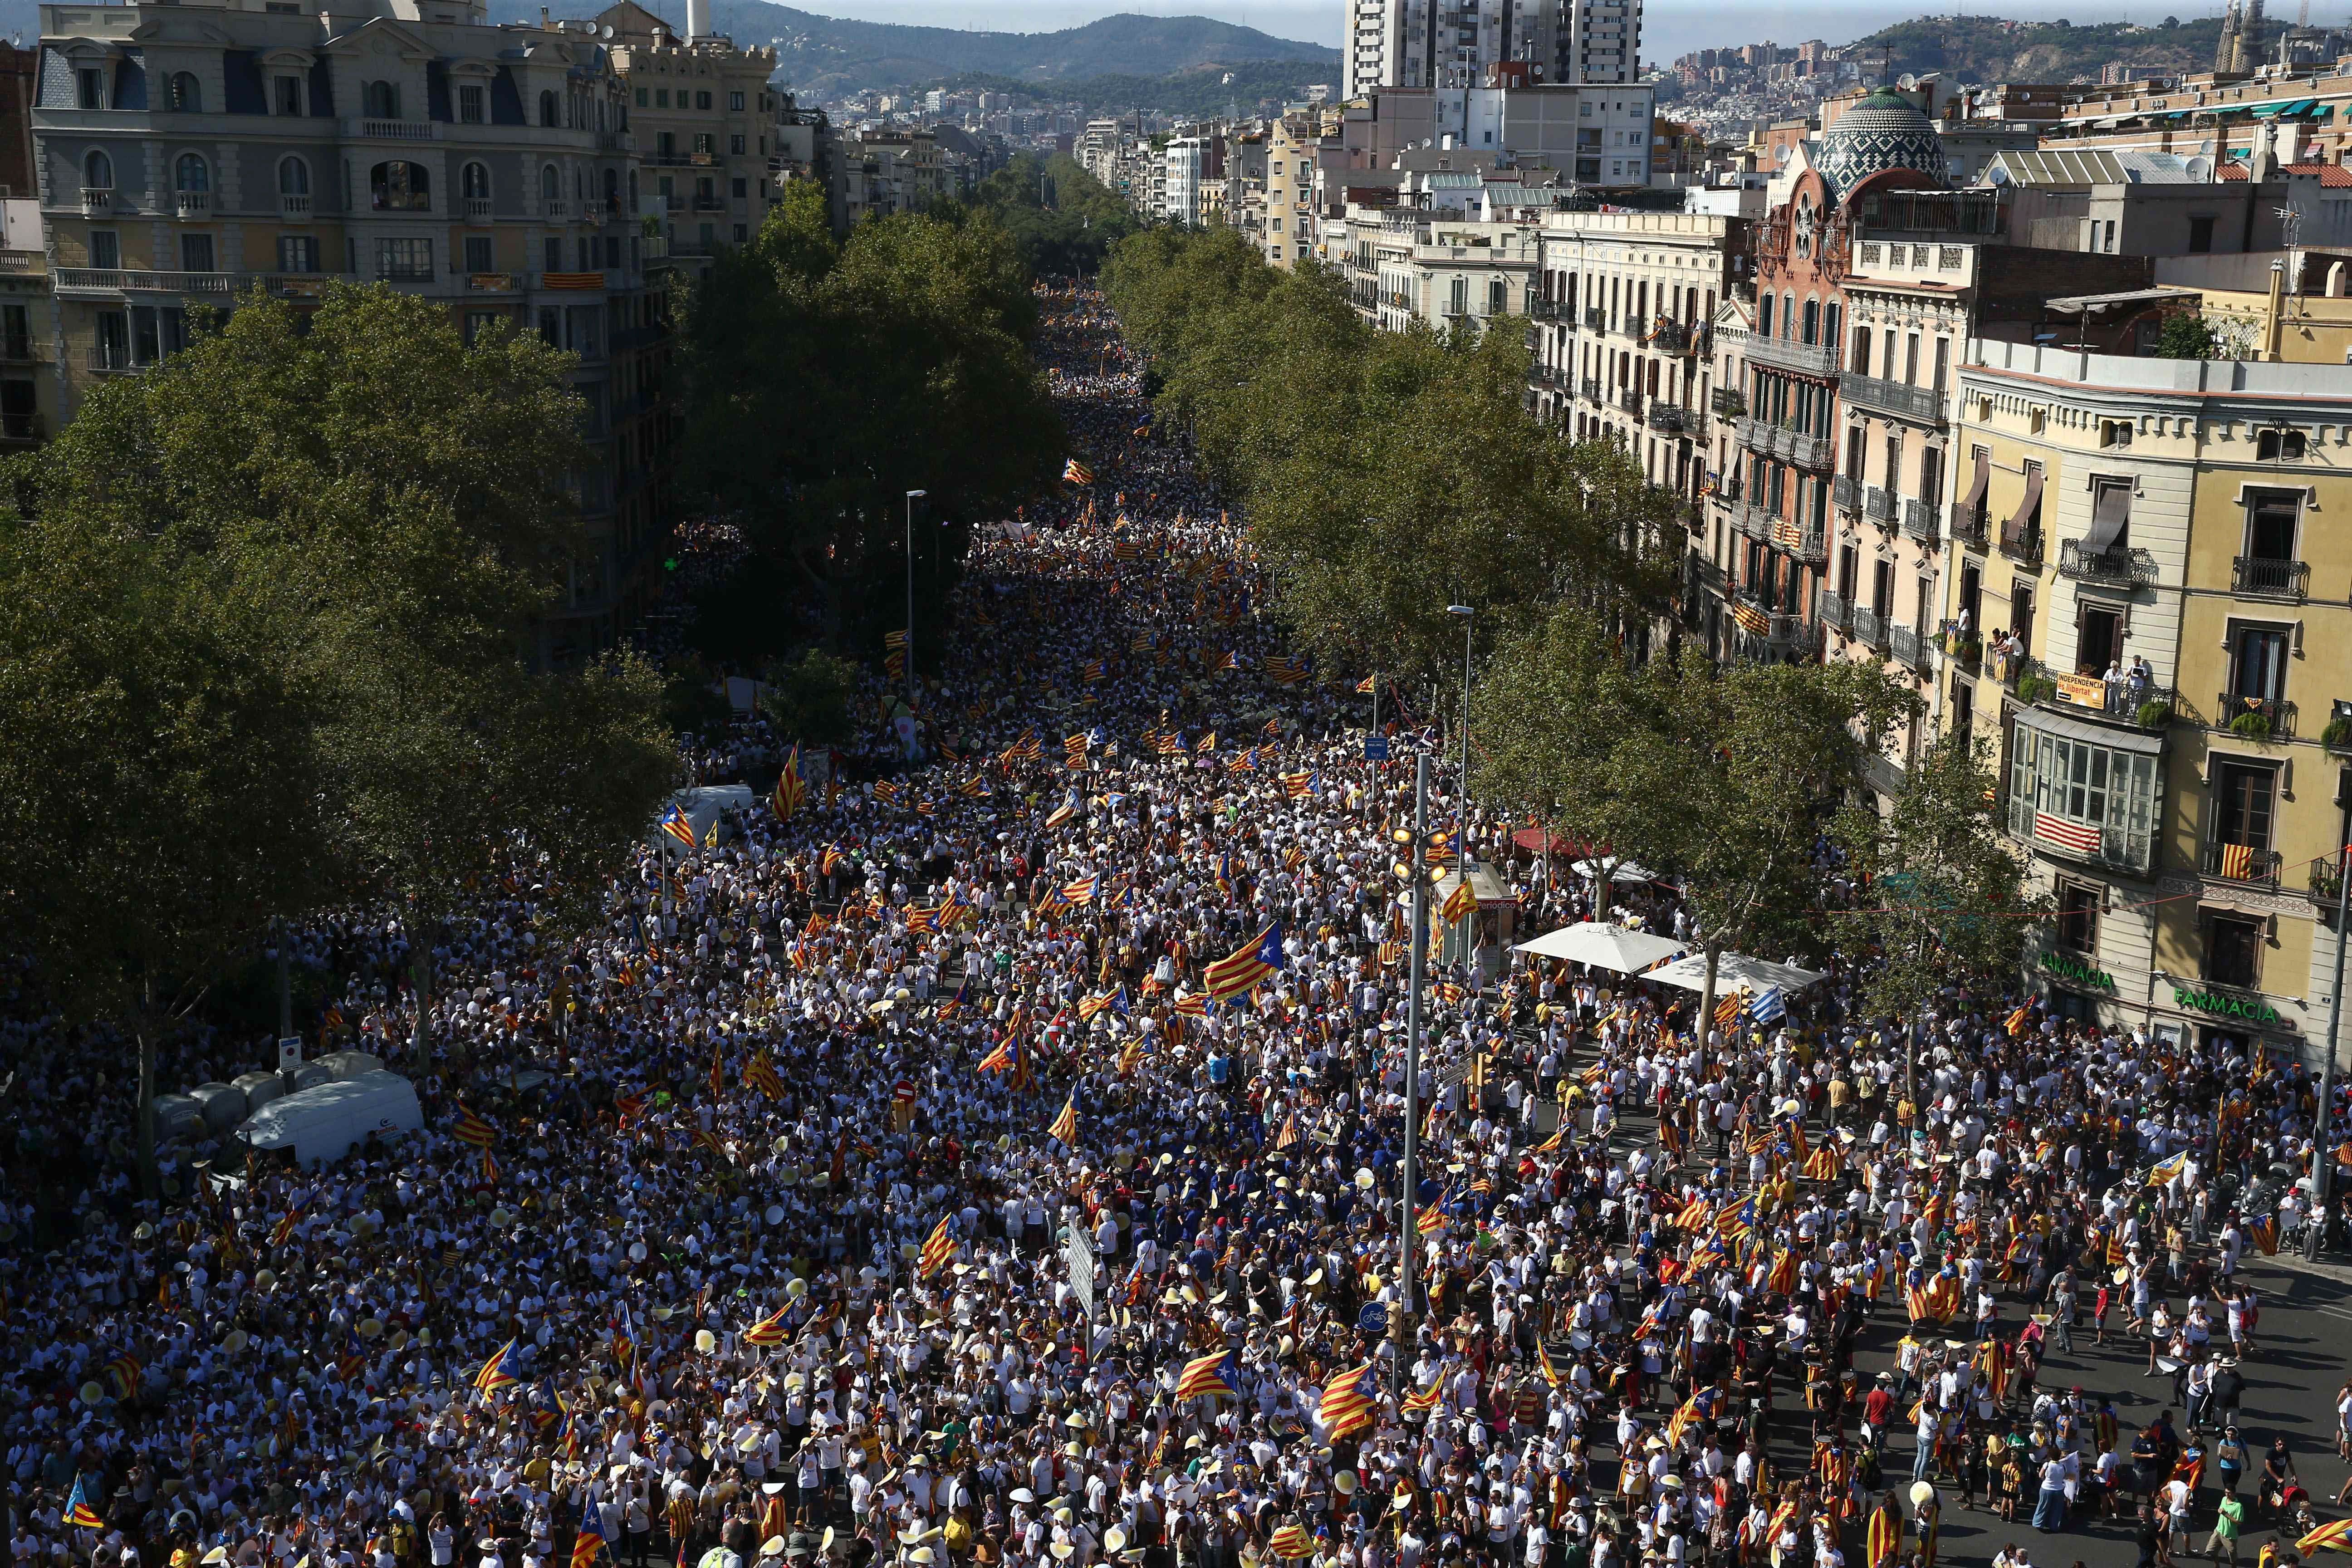 Barcelona late "a un palmo de la República de las libertades"